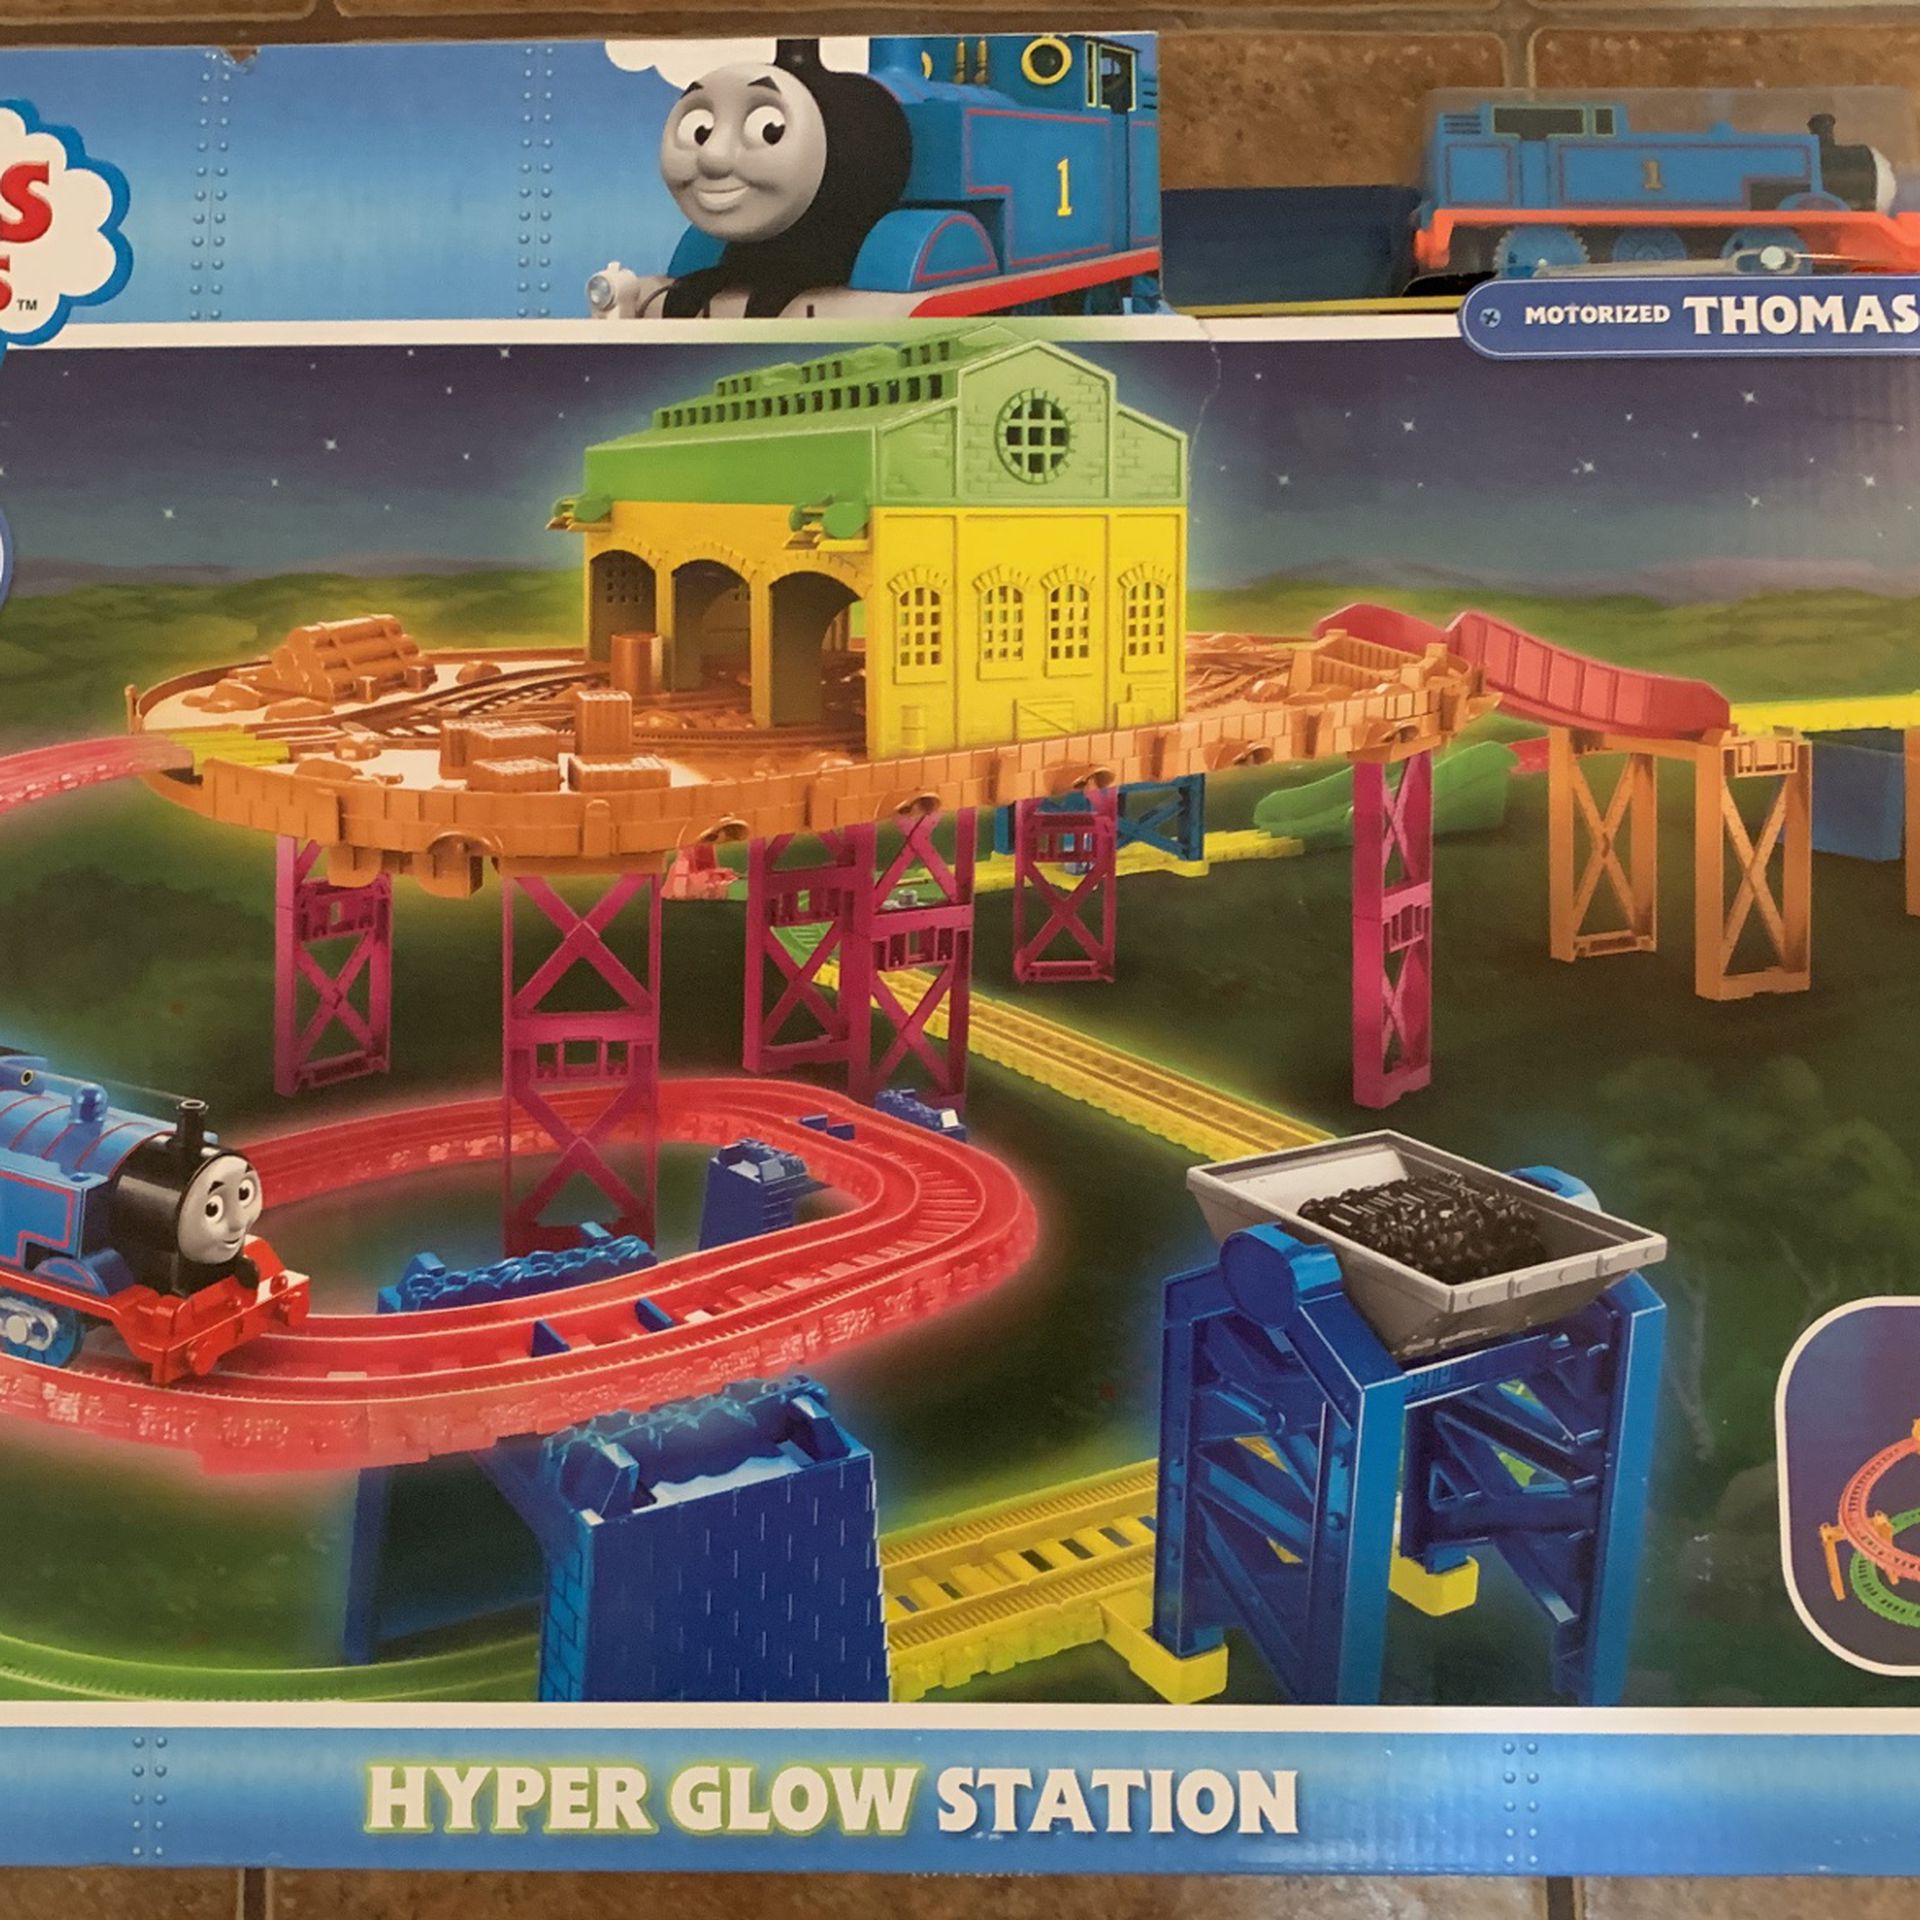 Thomas & Friends Hyper Glow Station $40